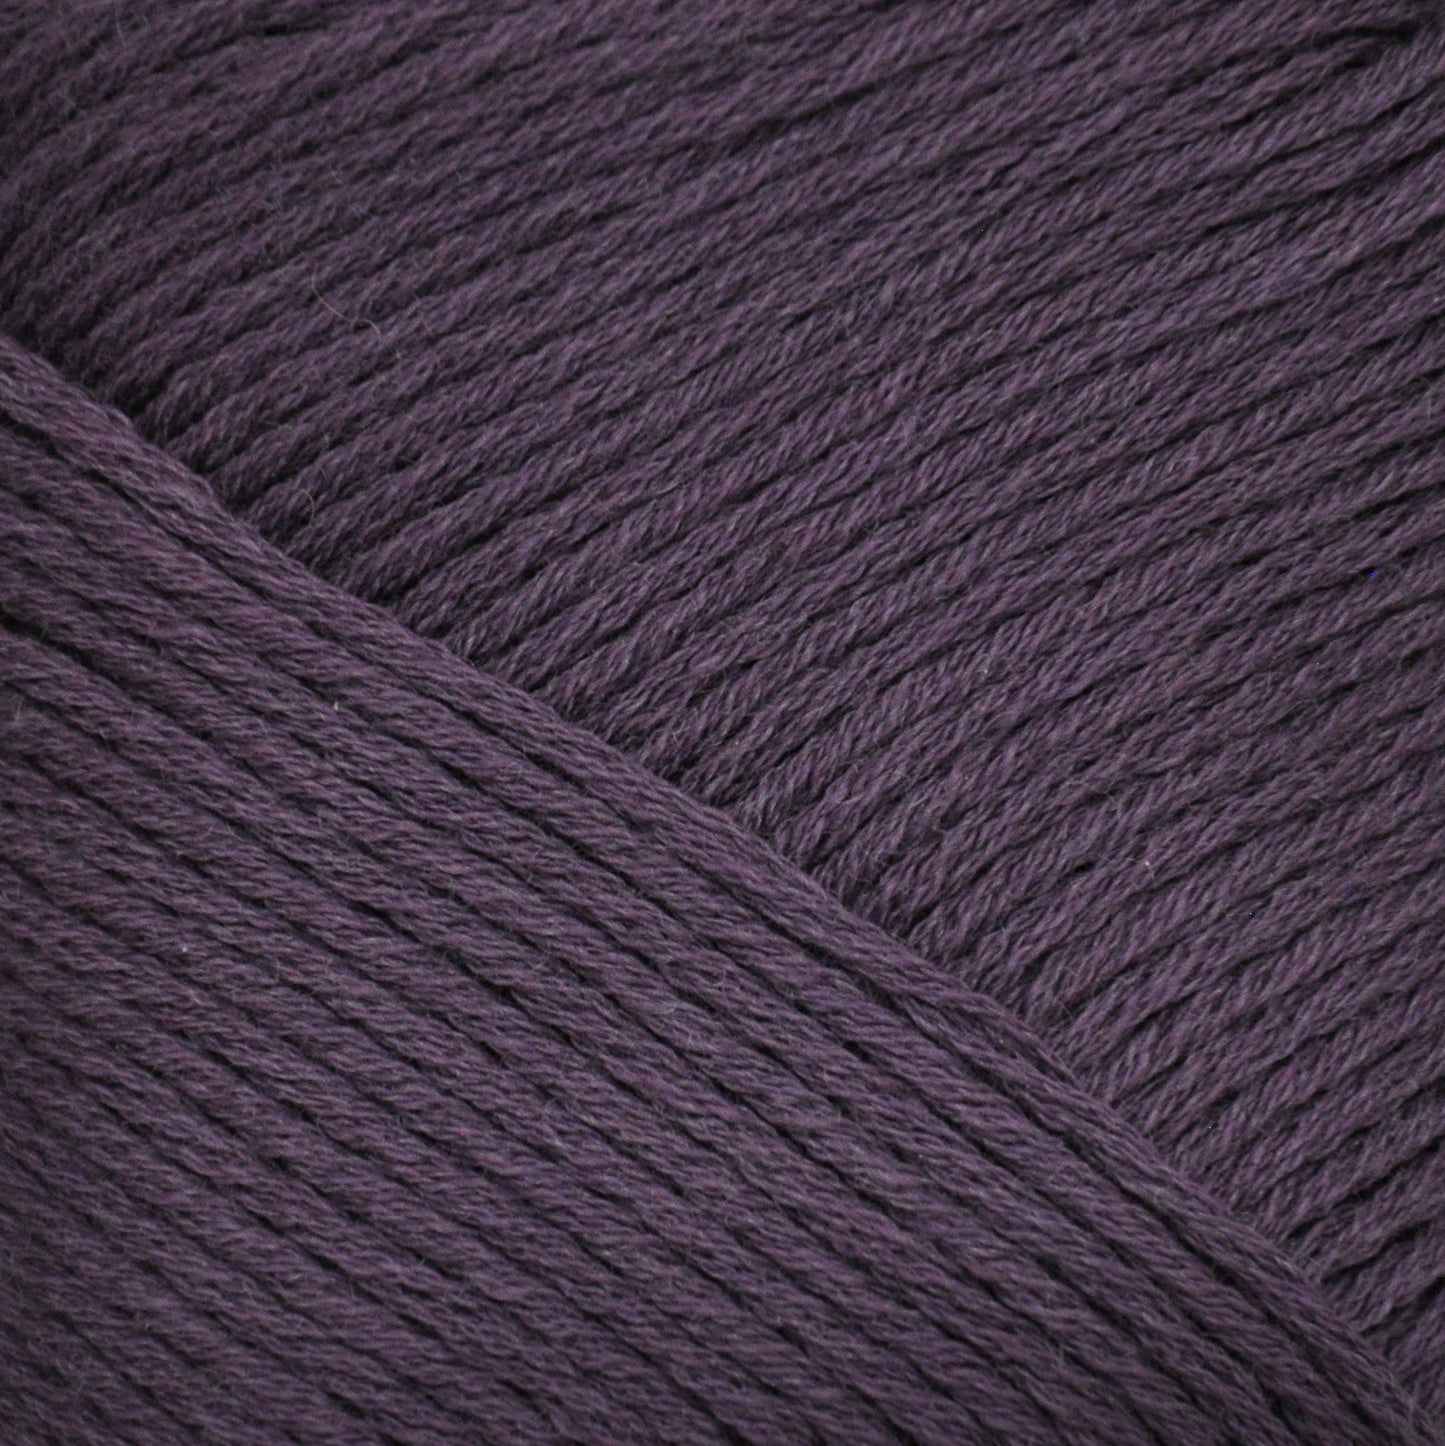 Cotton Fine Yarn Fingering Weight Yarn | 50 grams, 215 Yards | 80% Pima Cotton 20% Merino Wool - Textile Indie 